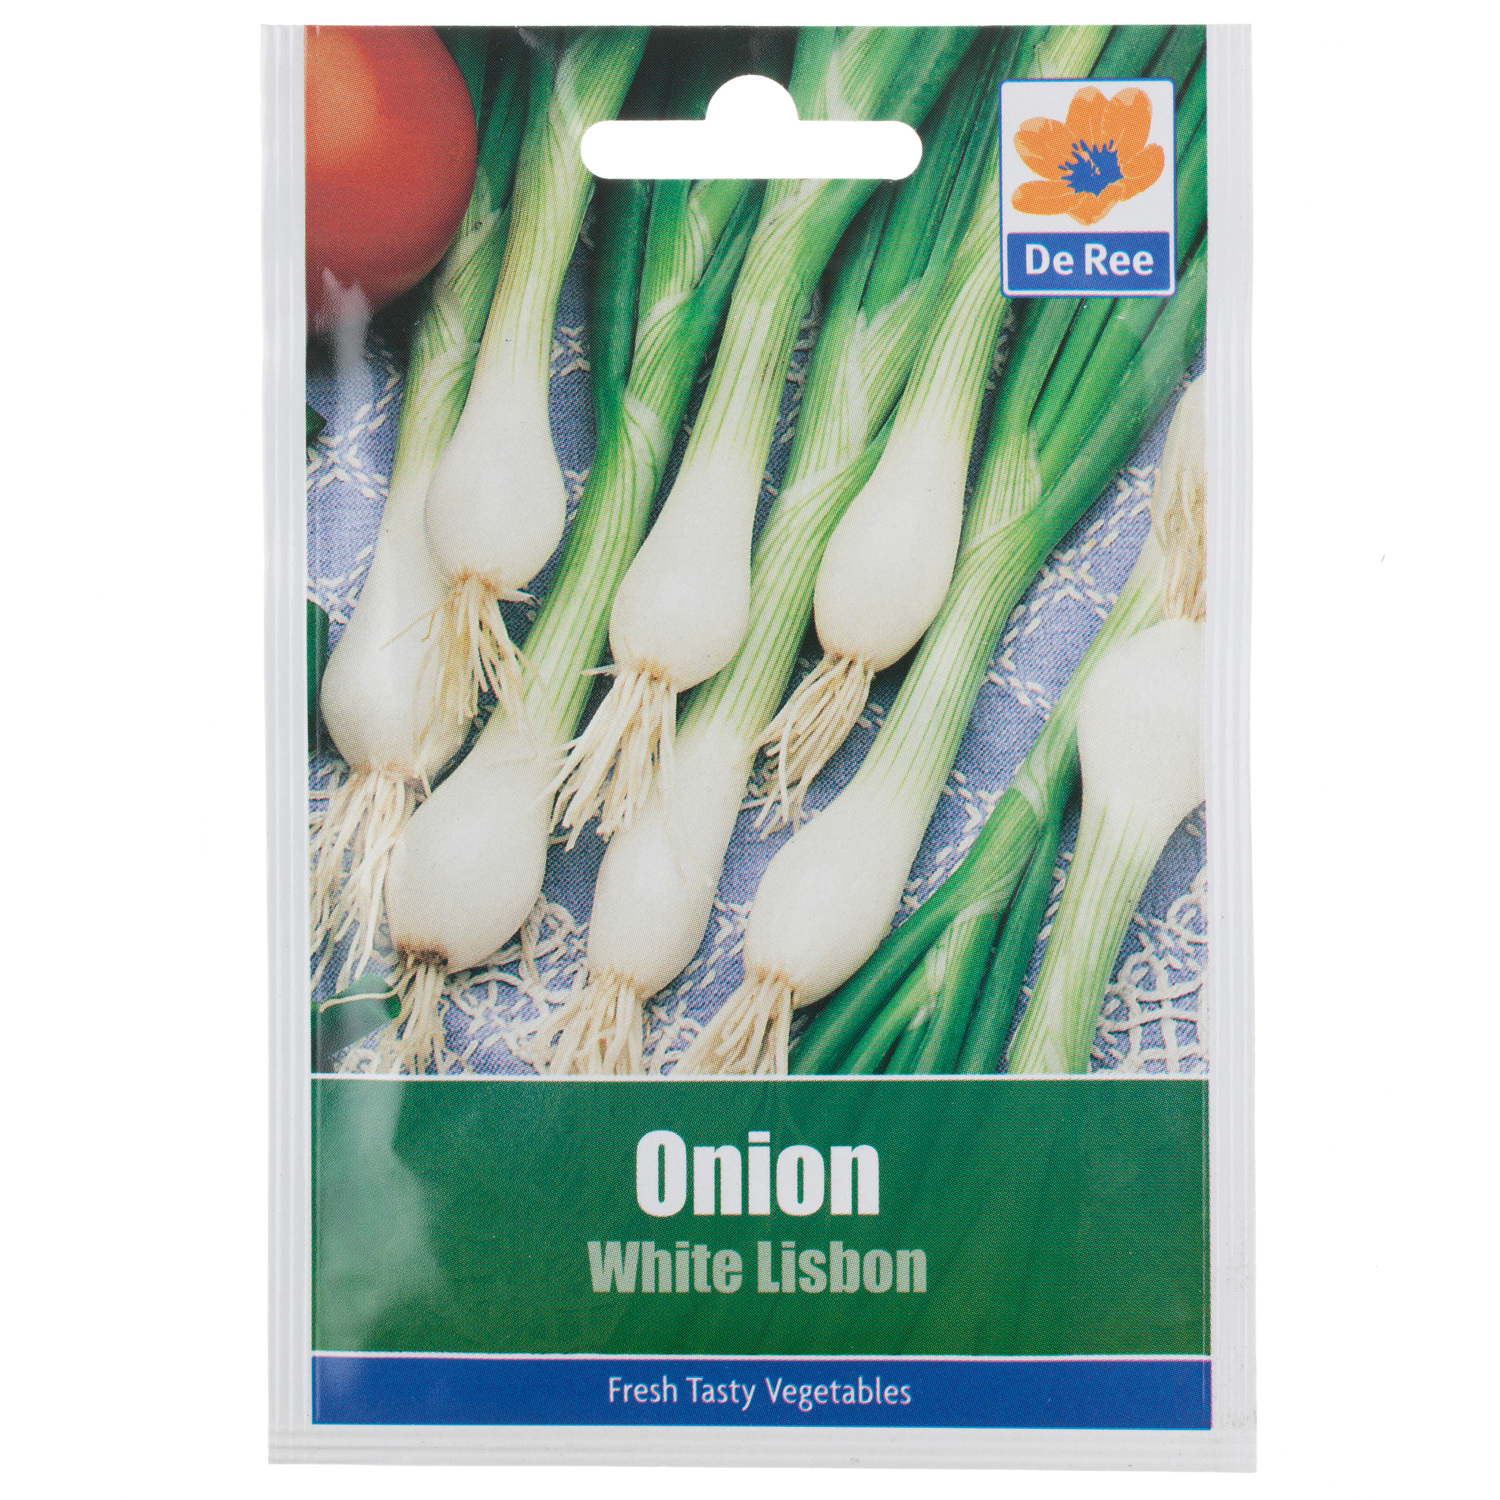 Onion White Lisbon Seed Packet Image